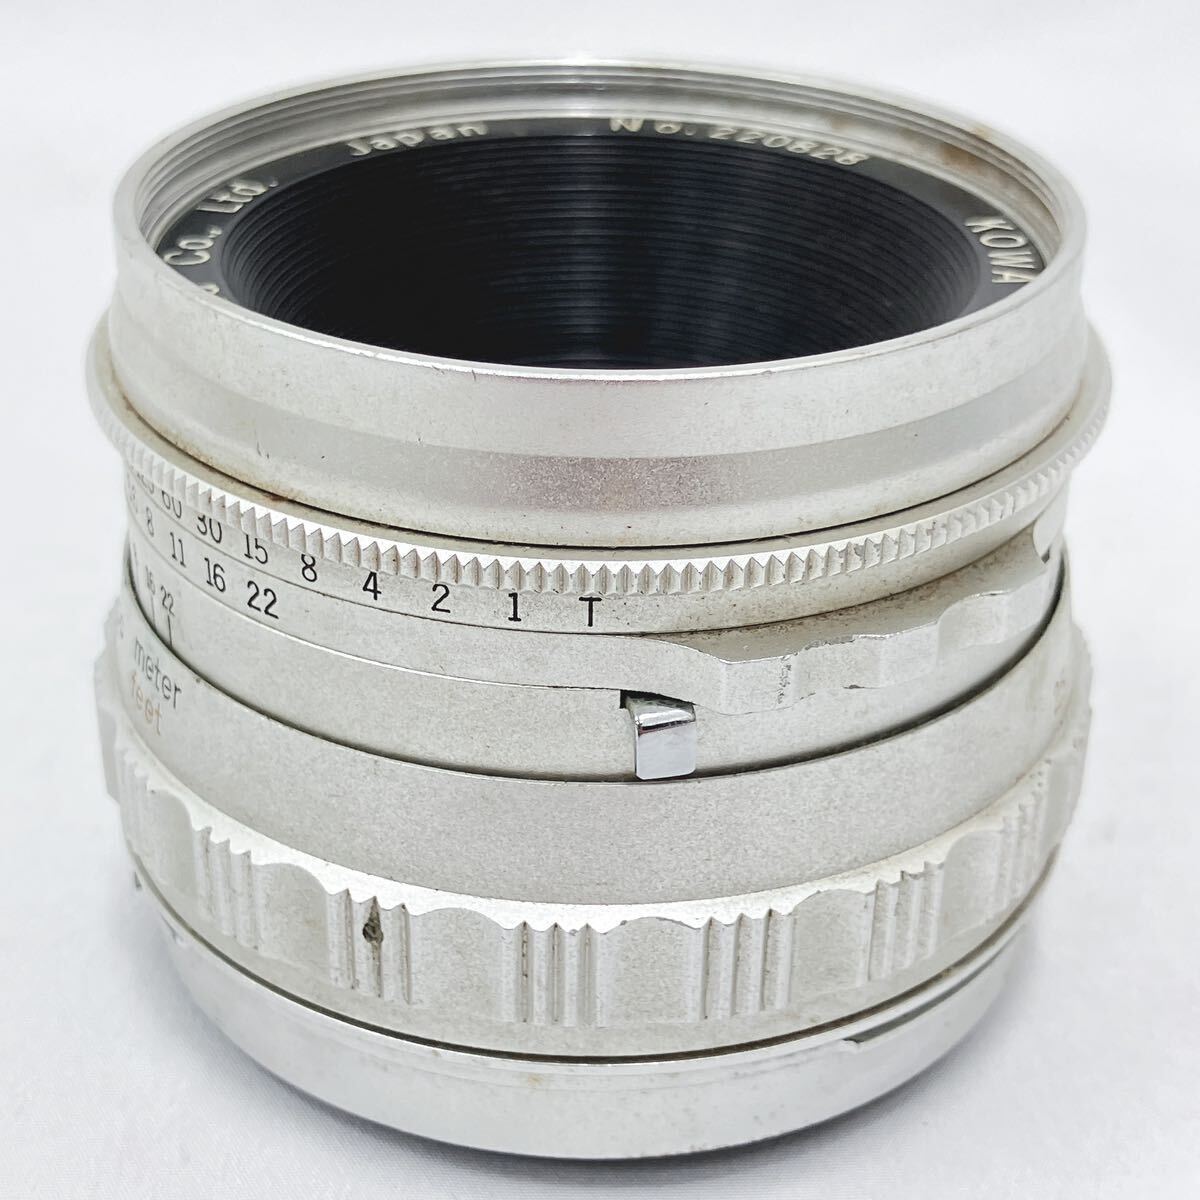 KOWAko-wa1:2.8 85mm camera lens R.03.31